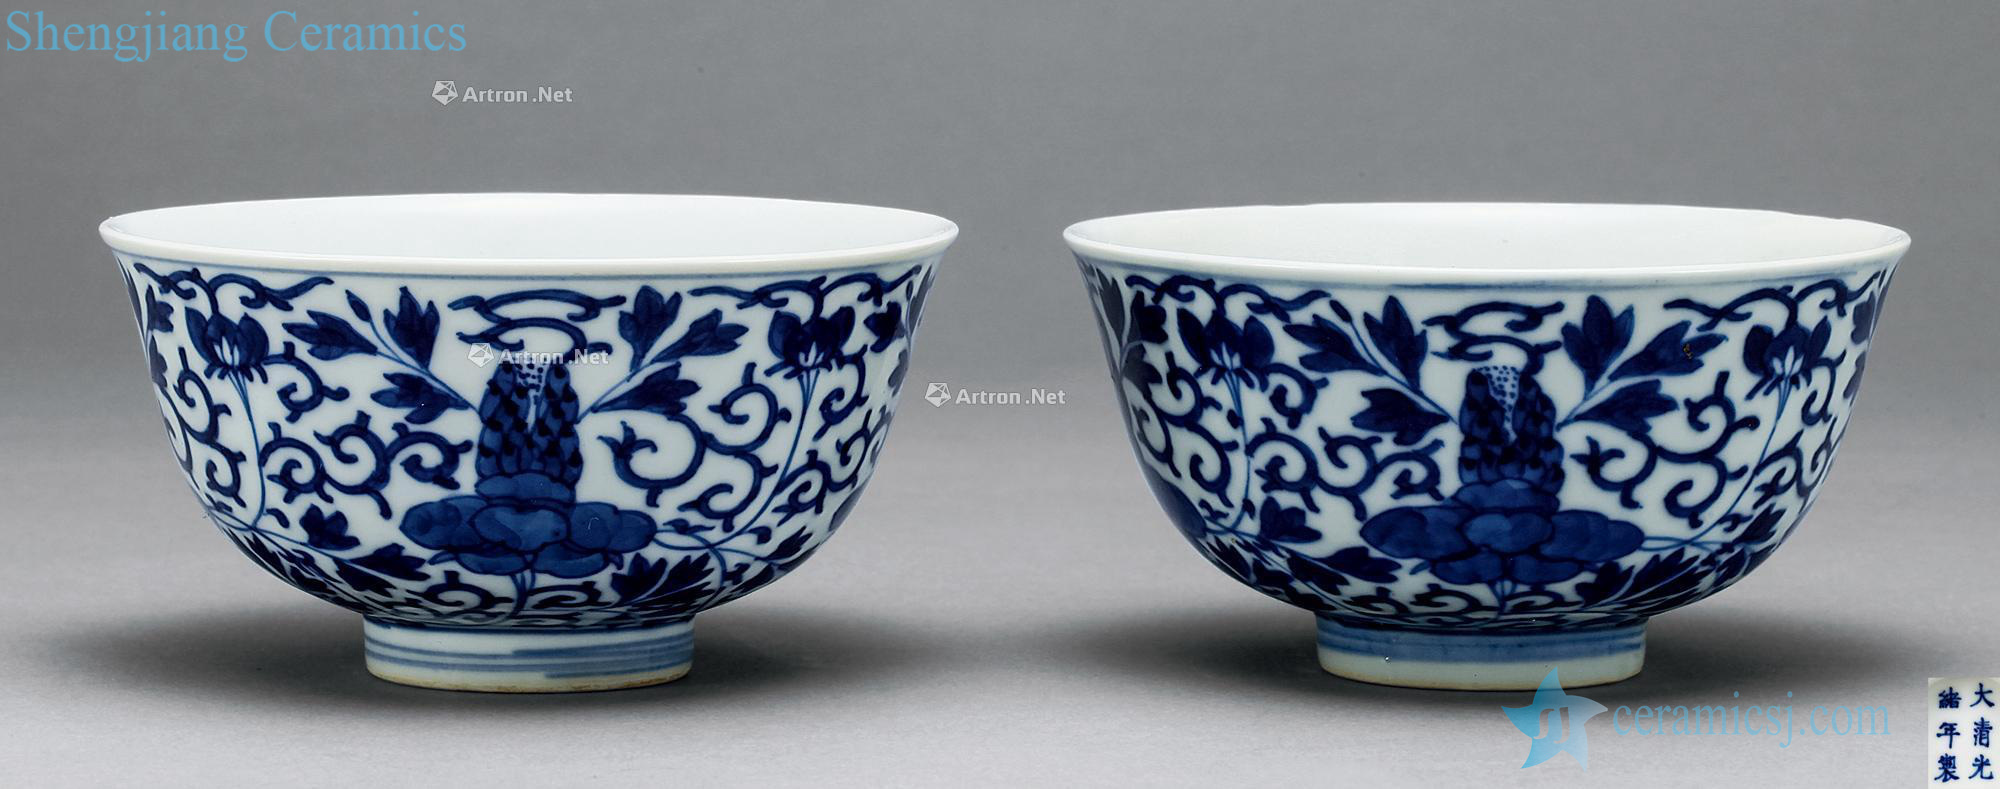 Qing guangxu Blue and white flower bowl (2)